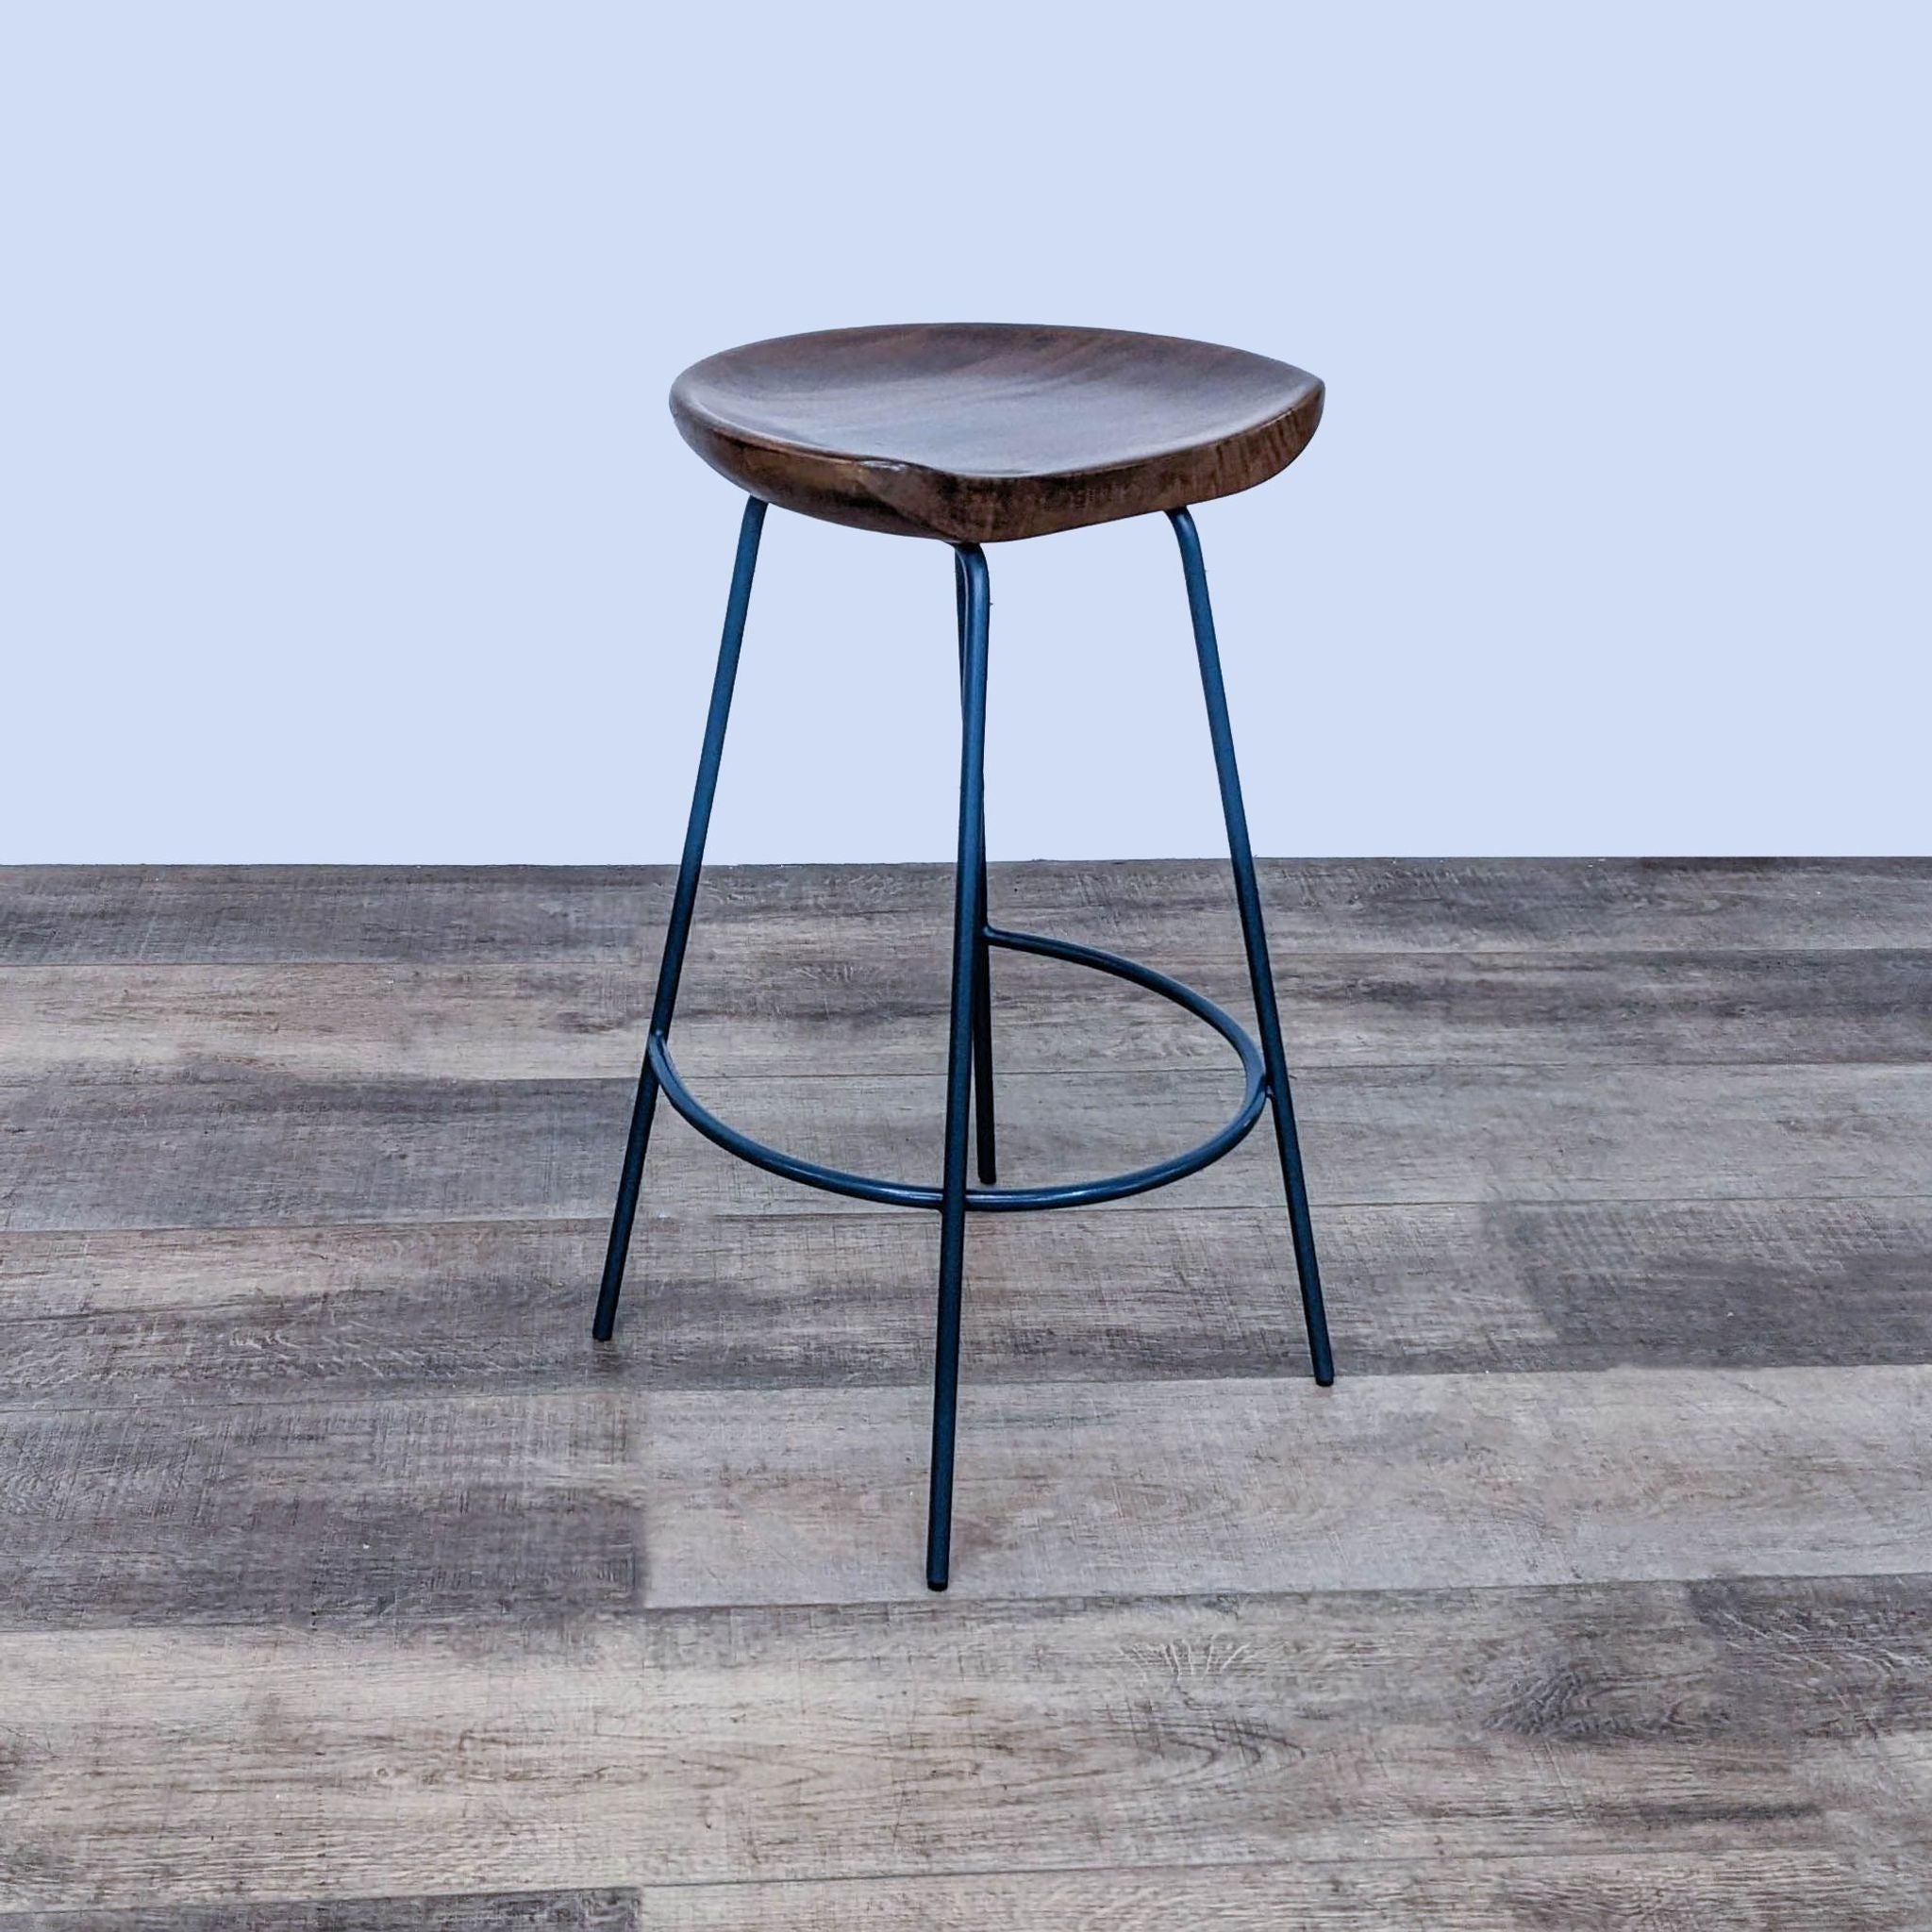 West Elm's Alden solid wood bucket seat counter stool on sleek black steel base, displayed in profile.